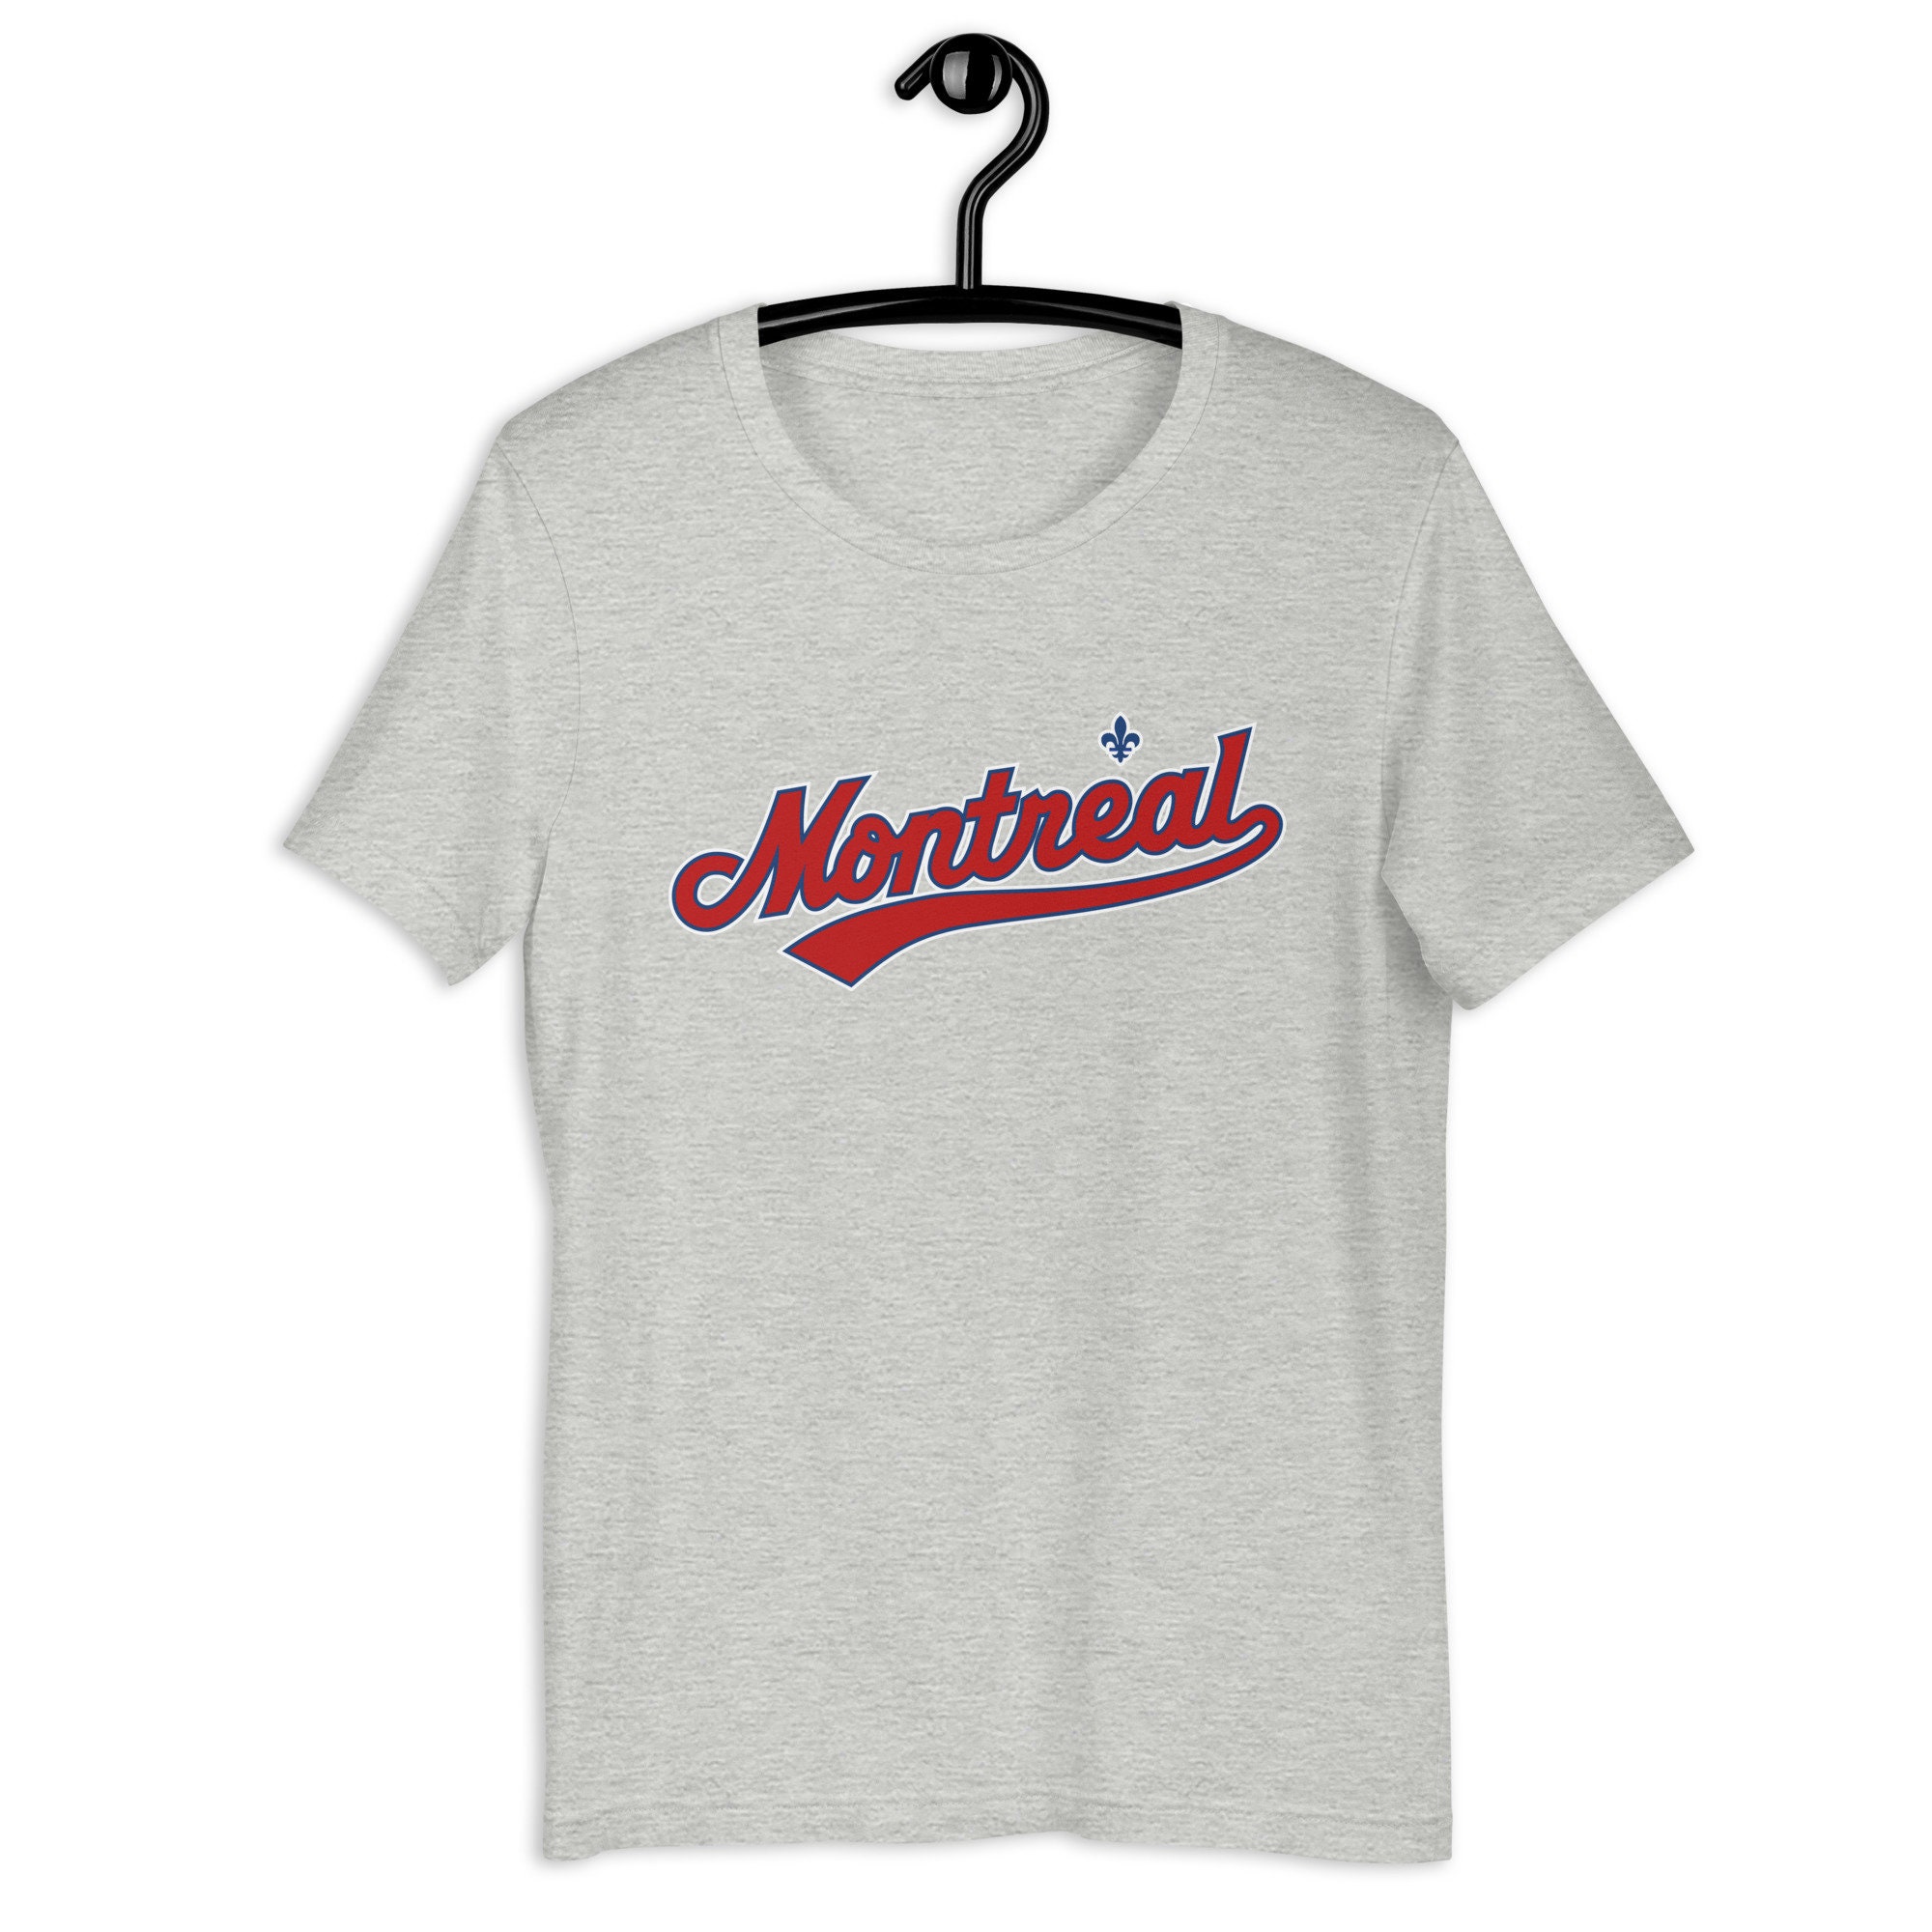 NeedfulThings416 Vintage 1992 Montreal Expos MLB Baseball Single Stitch T-Shirt Adult Size XL